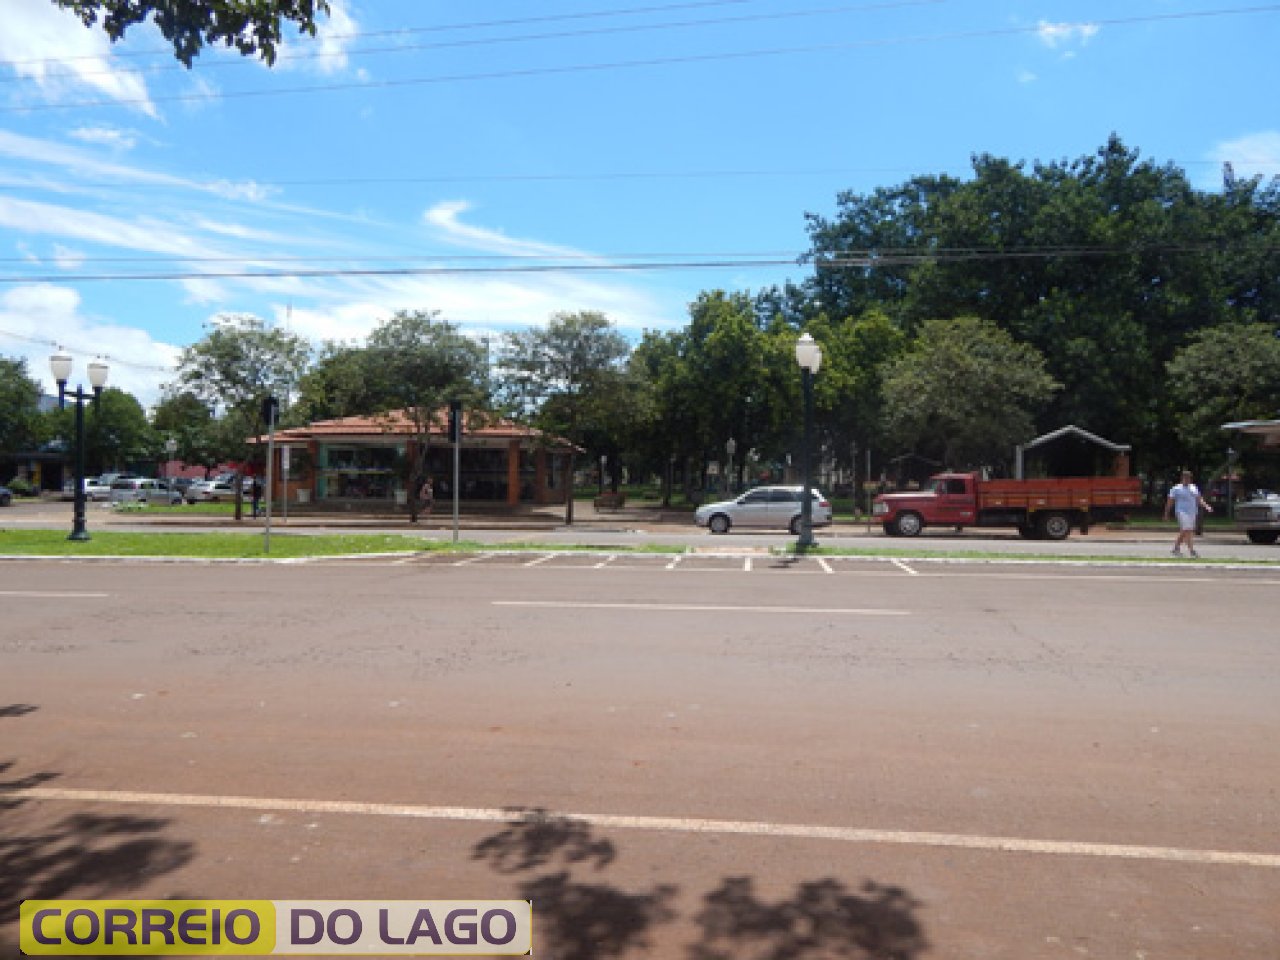 Atual Praça Central Antônio Thomé – Santa Helena. Foto 2015.